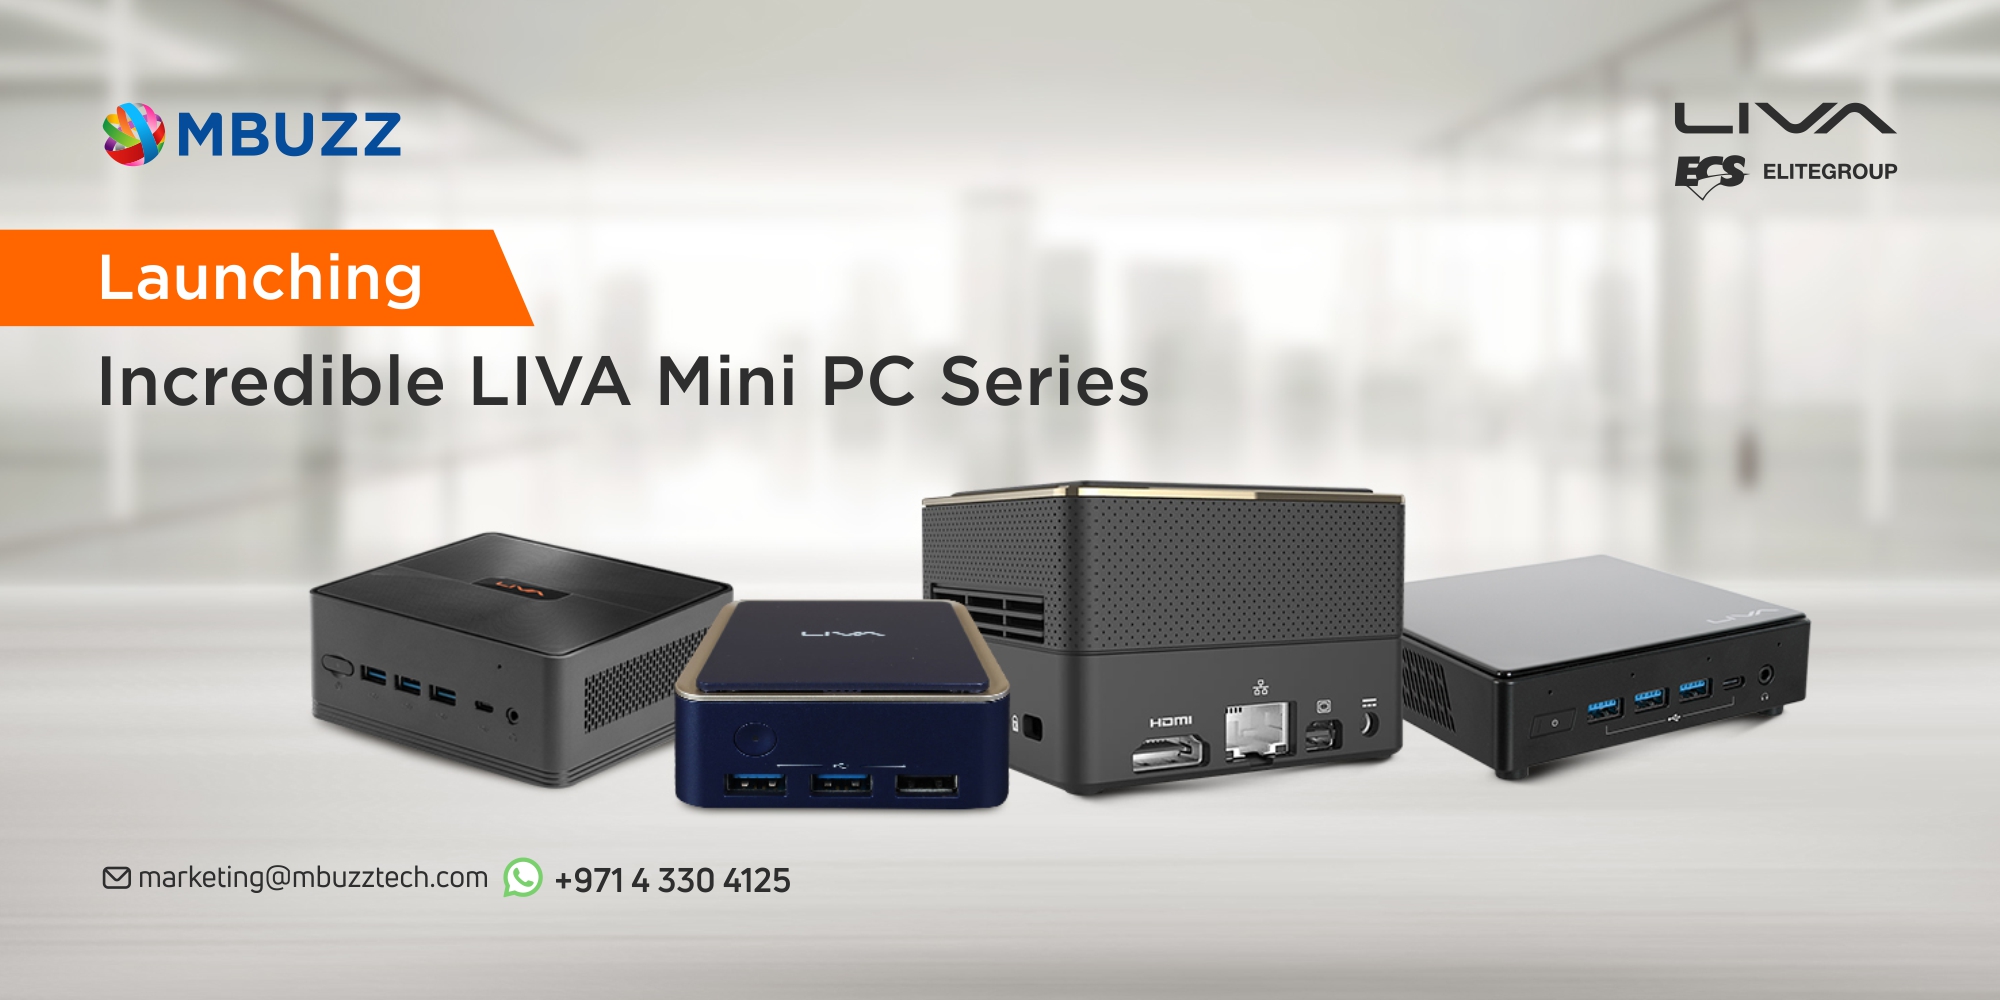 Mbuzz Launching Incredible Liva Mini Pc Series Designed For Various Smart Solutions Read More T Co 72ht3lkltp For Enquiries Marketing Mbuzztech Com Wapp T Co Qstemd9ns9 Liva Minipc Ecs